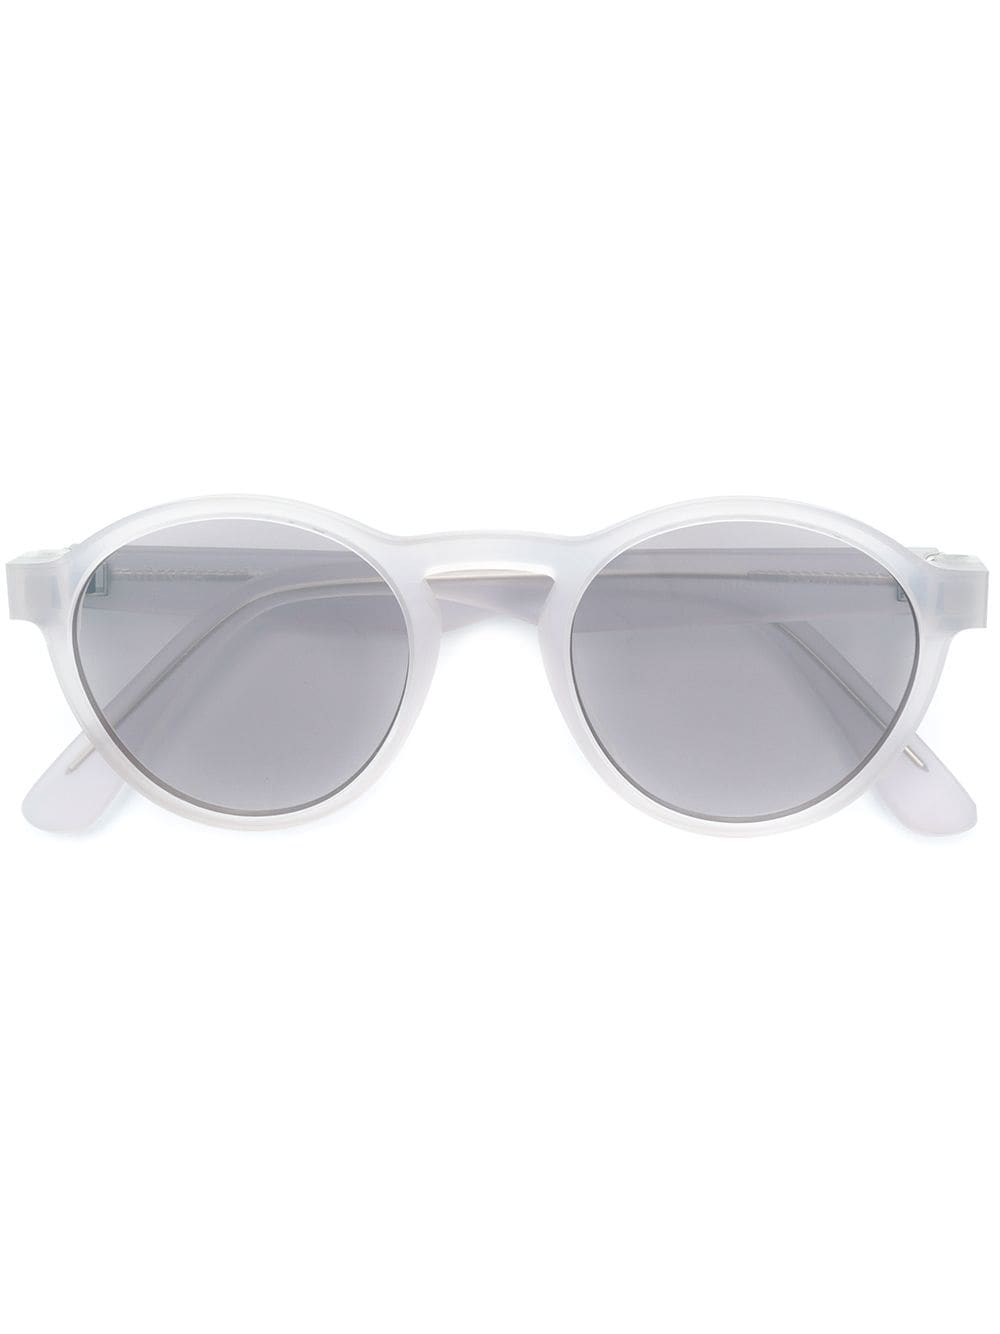 Mykita x Maison Margiela round sunglasses - Grey von Mykita